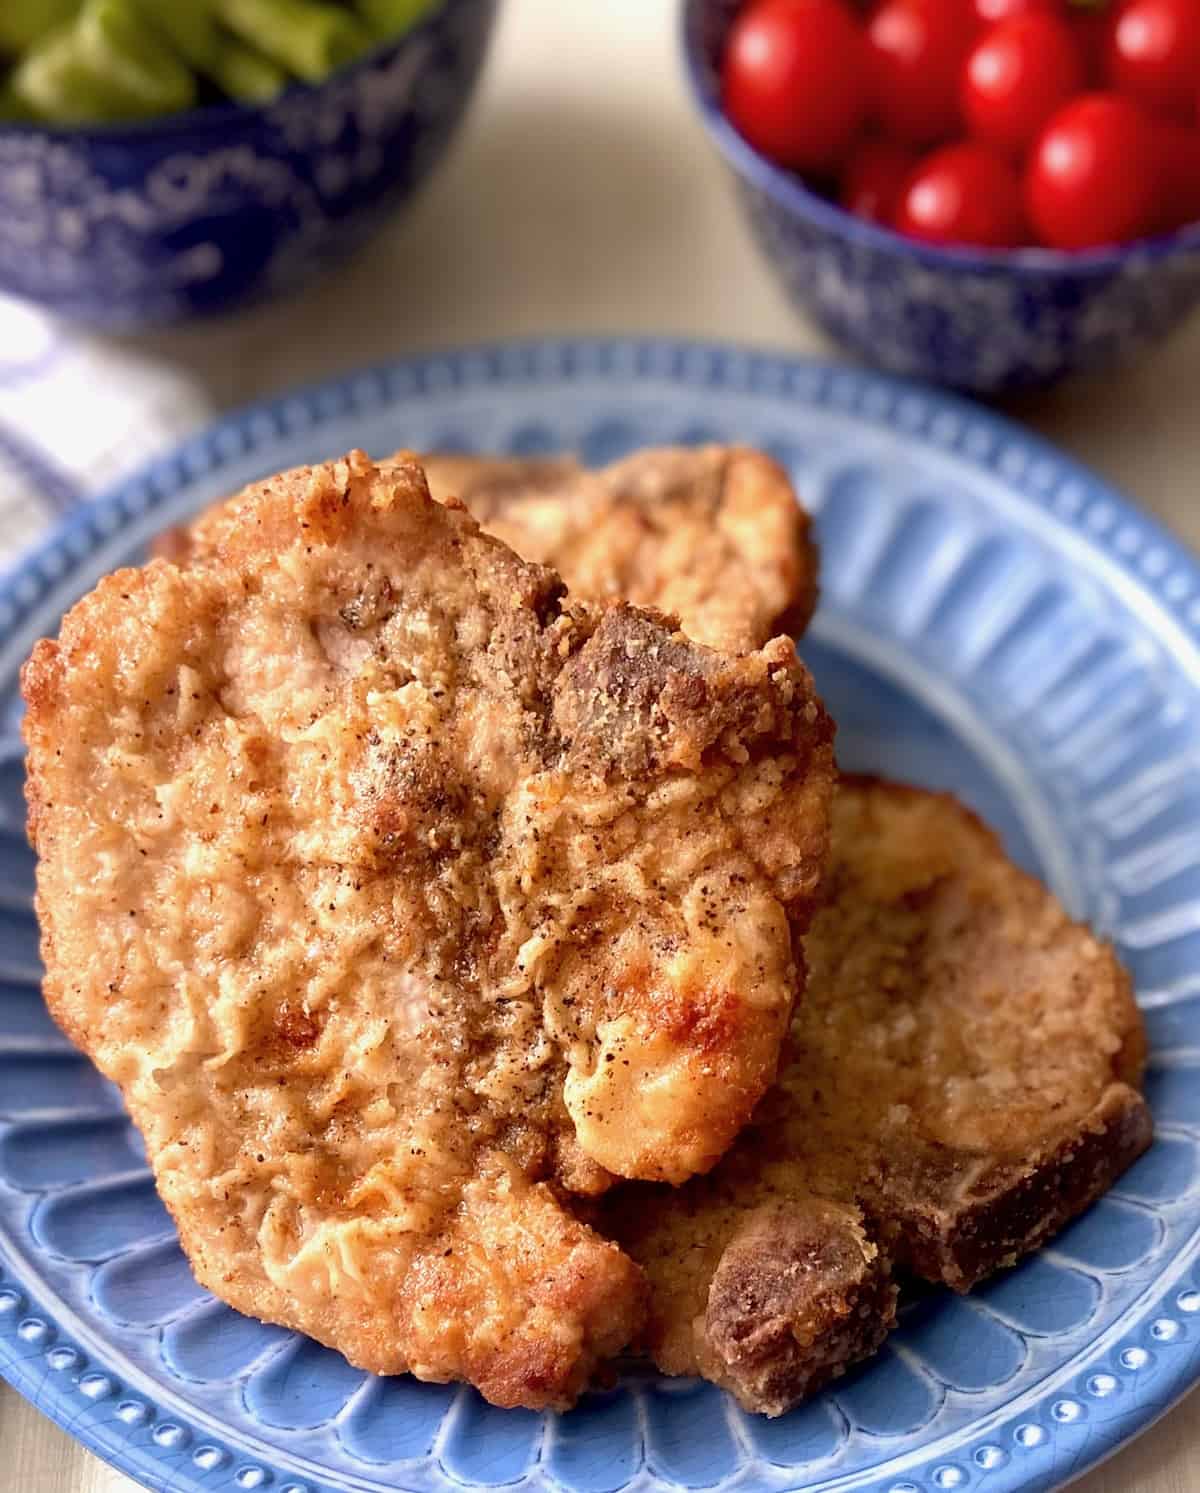 Crispy golden pan fried pork chops on blue plate.